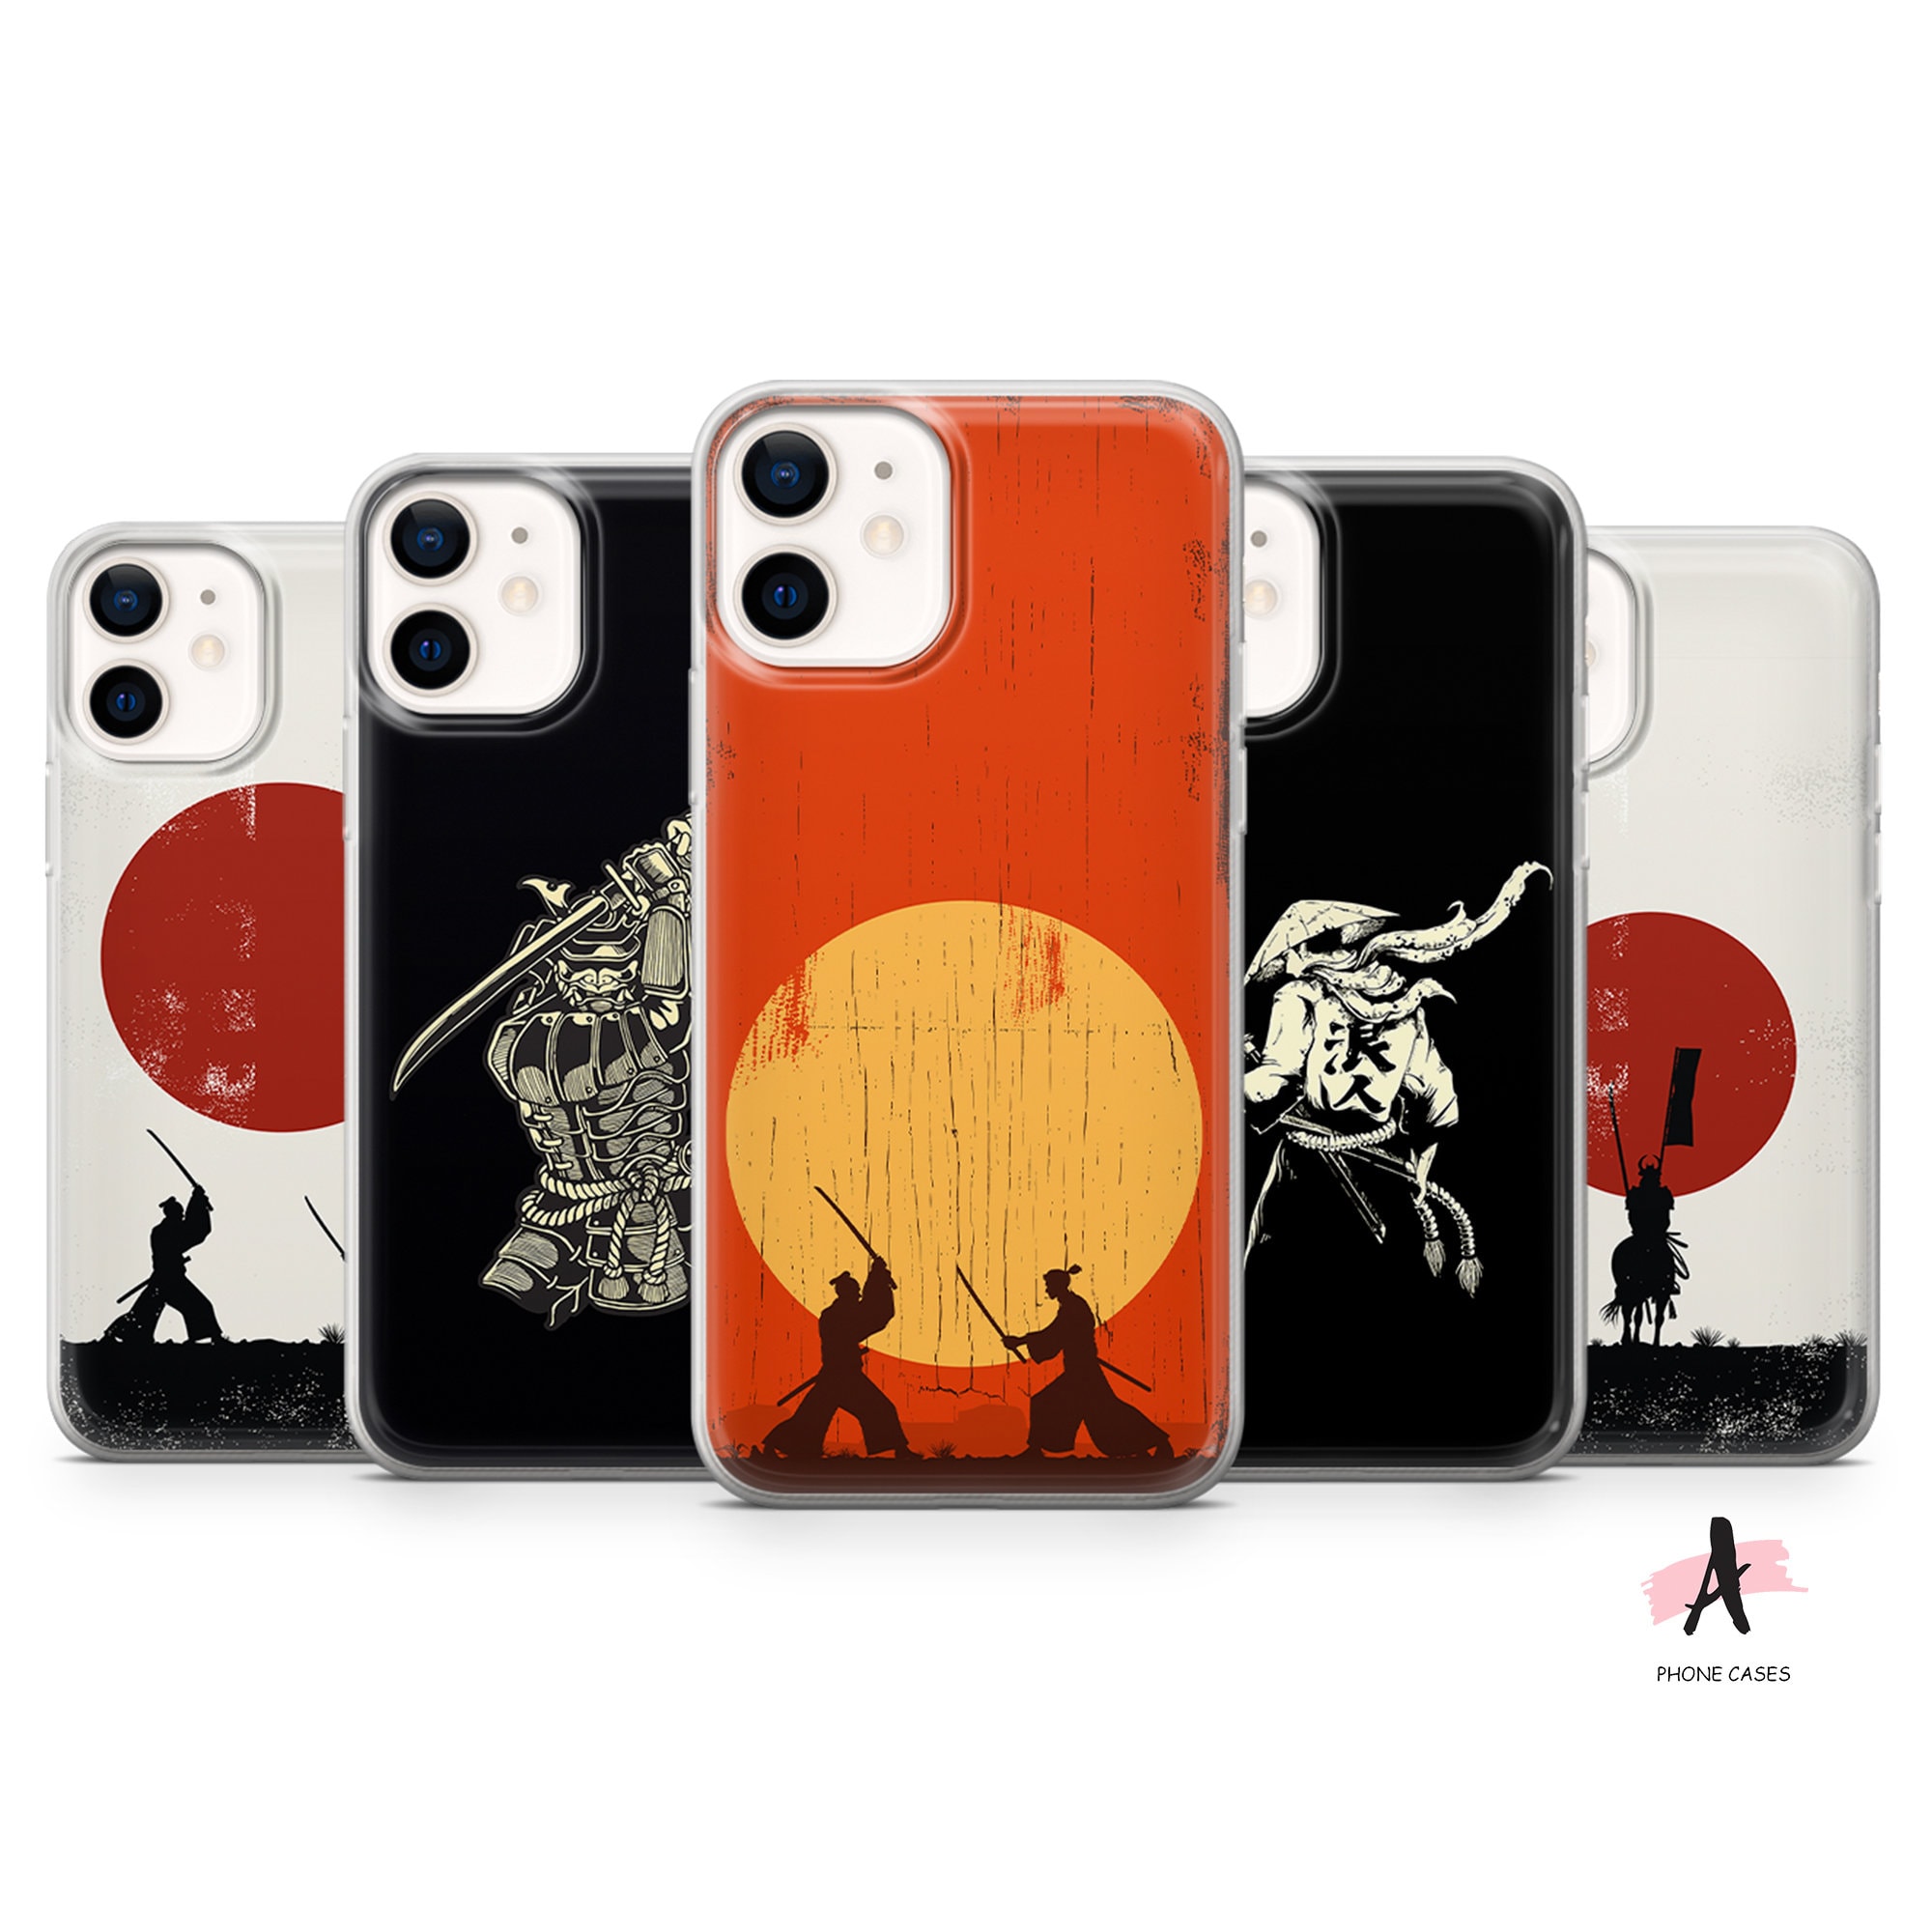 Golden State Warriors Lucky 30 iPhone XS MAX Case – carneyforia